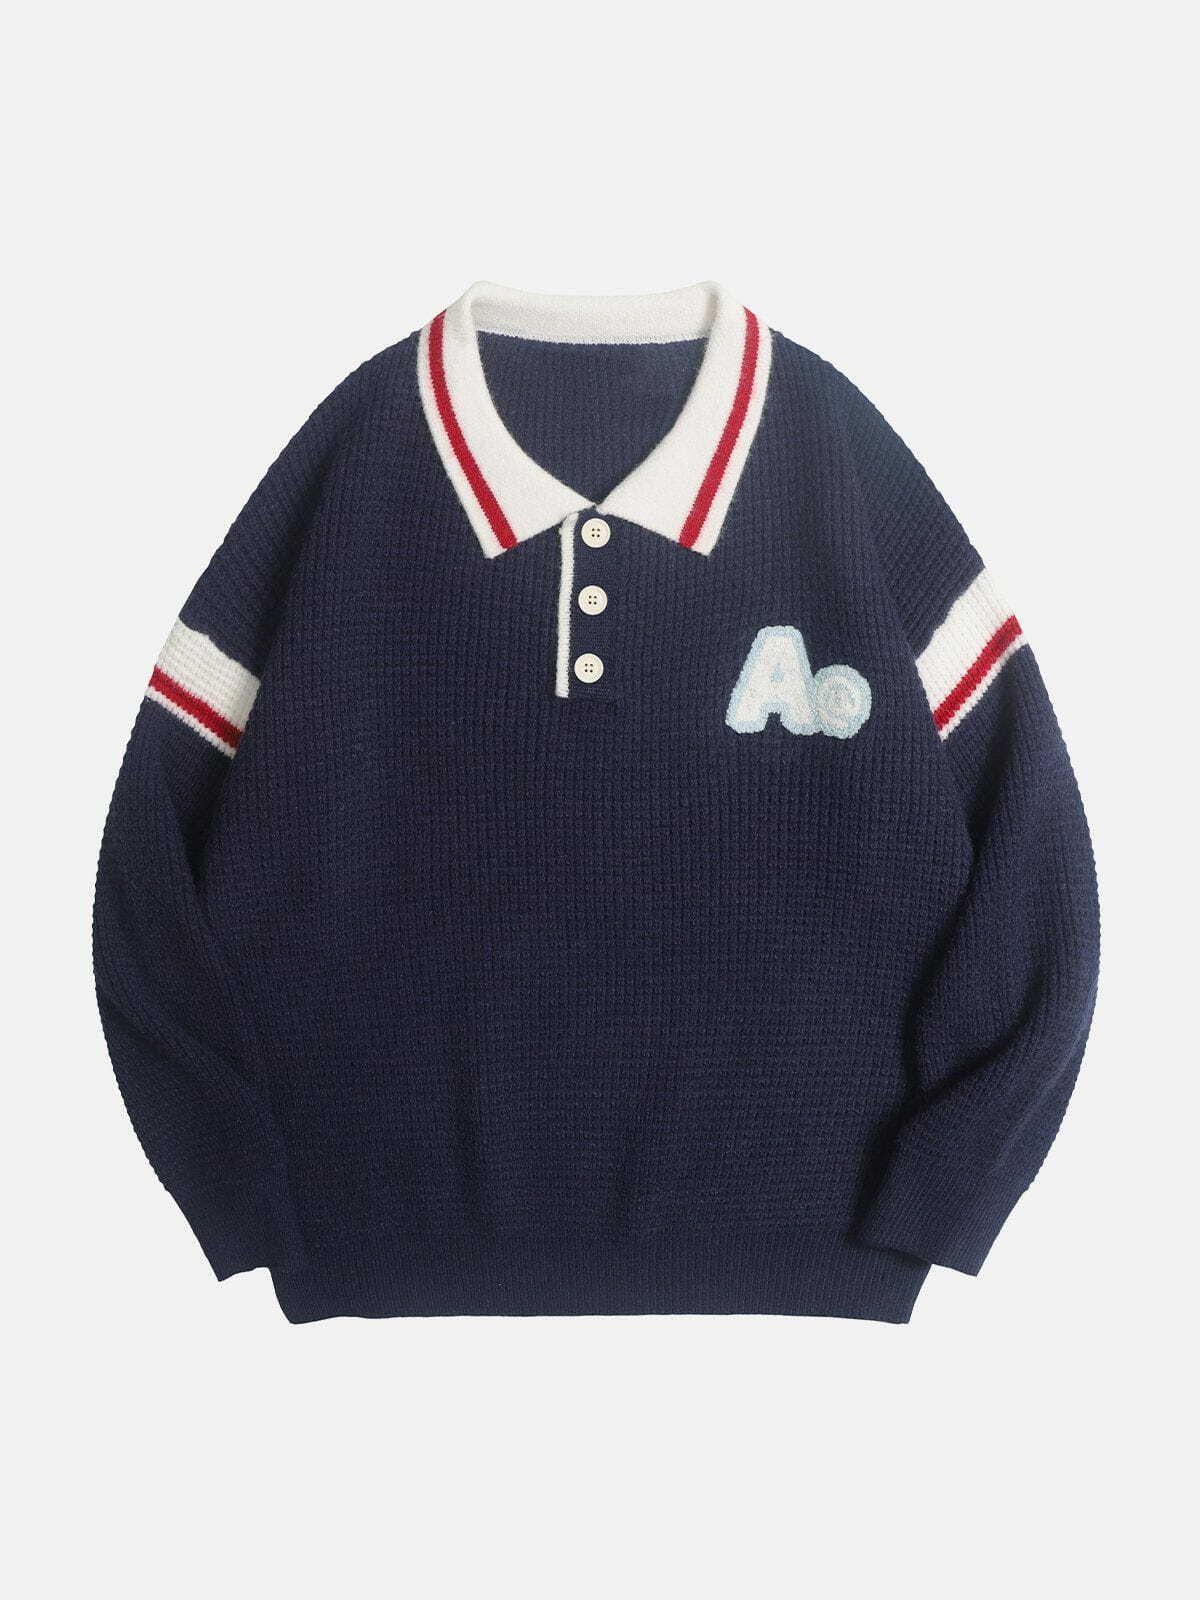 boutique vintage polo sweater retro cool & urban style 5547